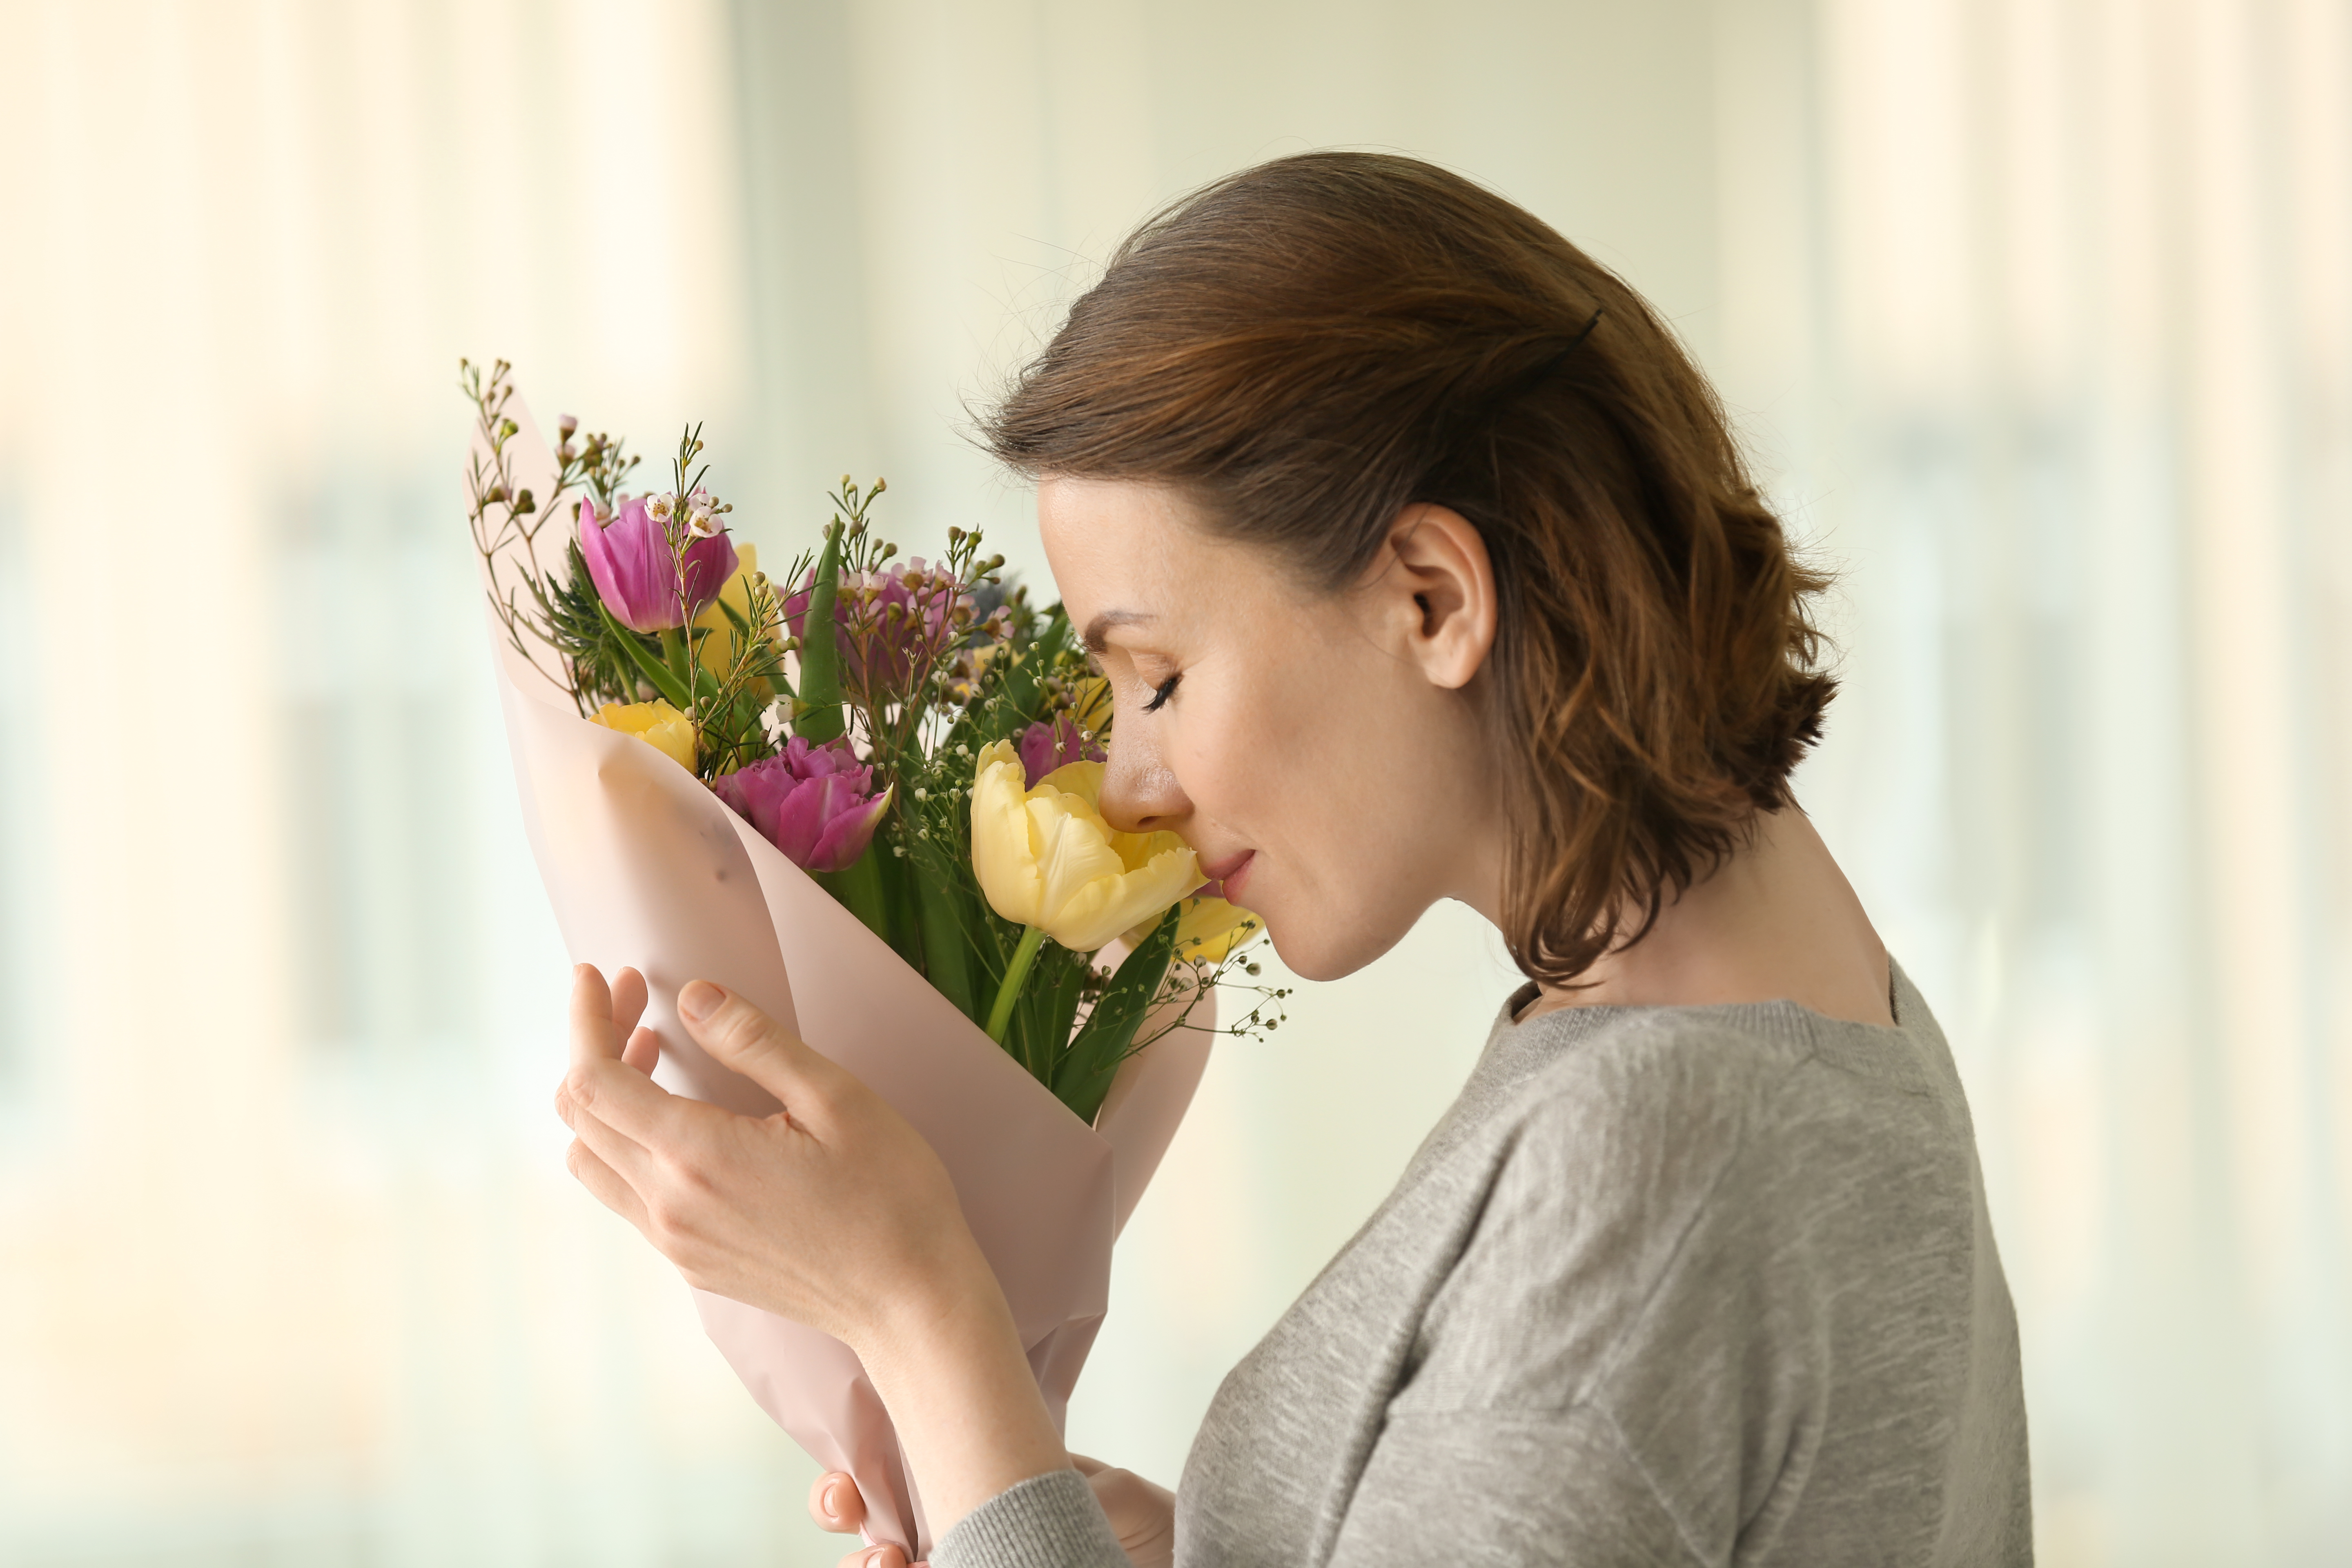 Why Do Women Like Receiving Flowers?